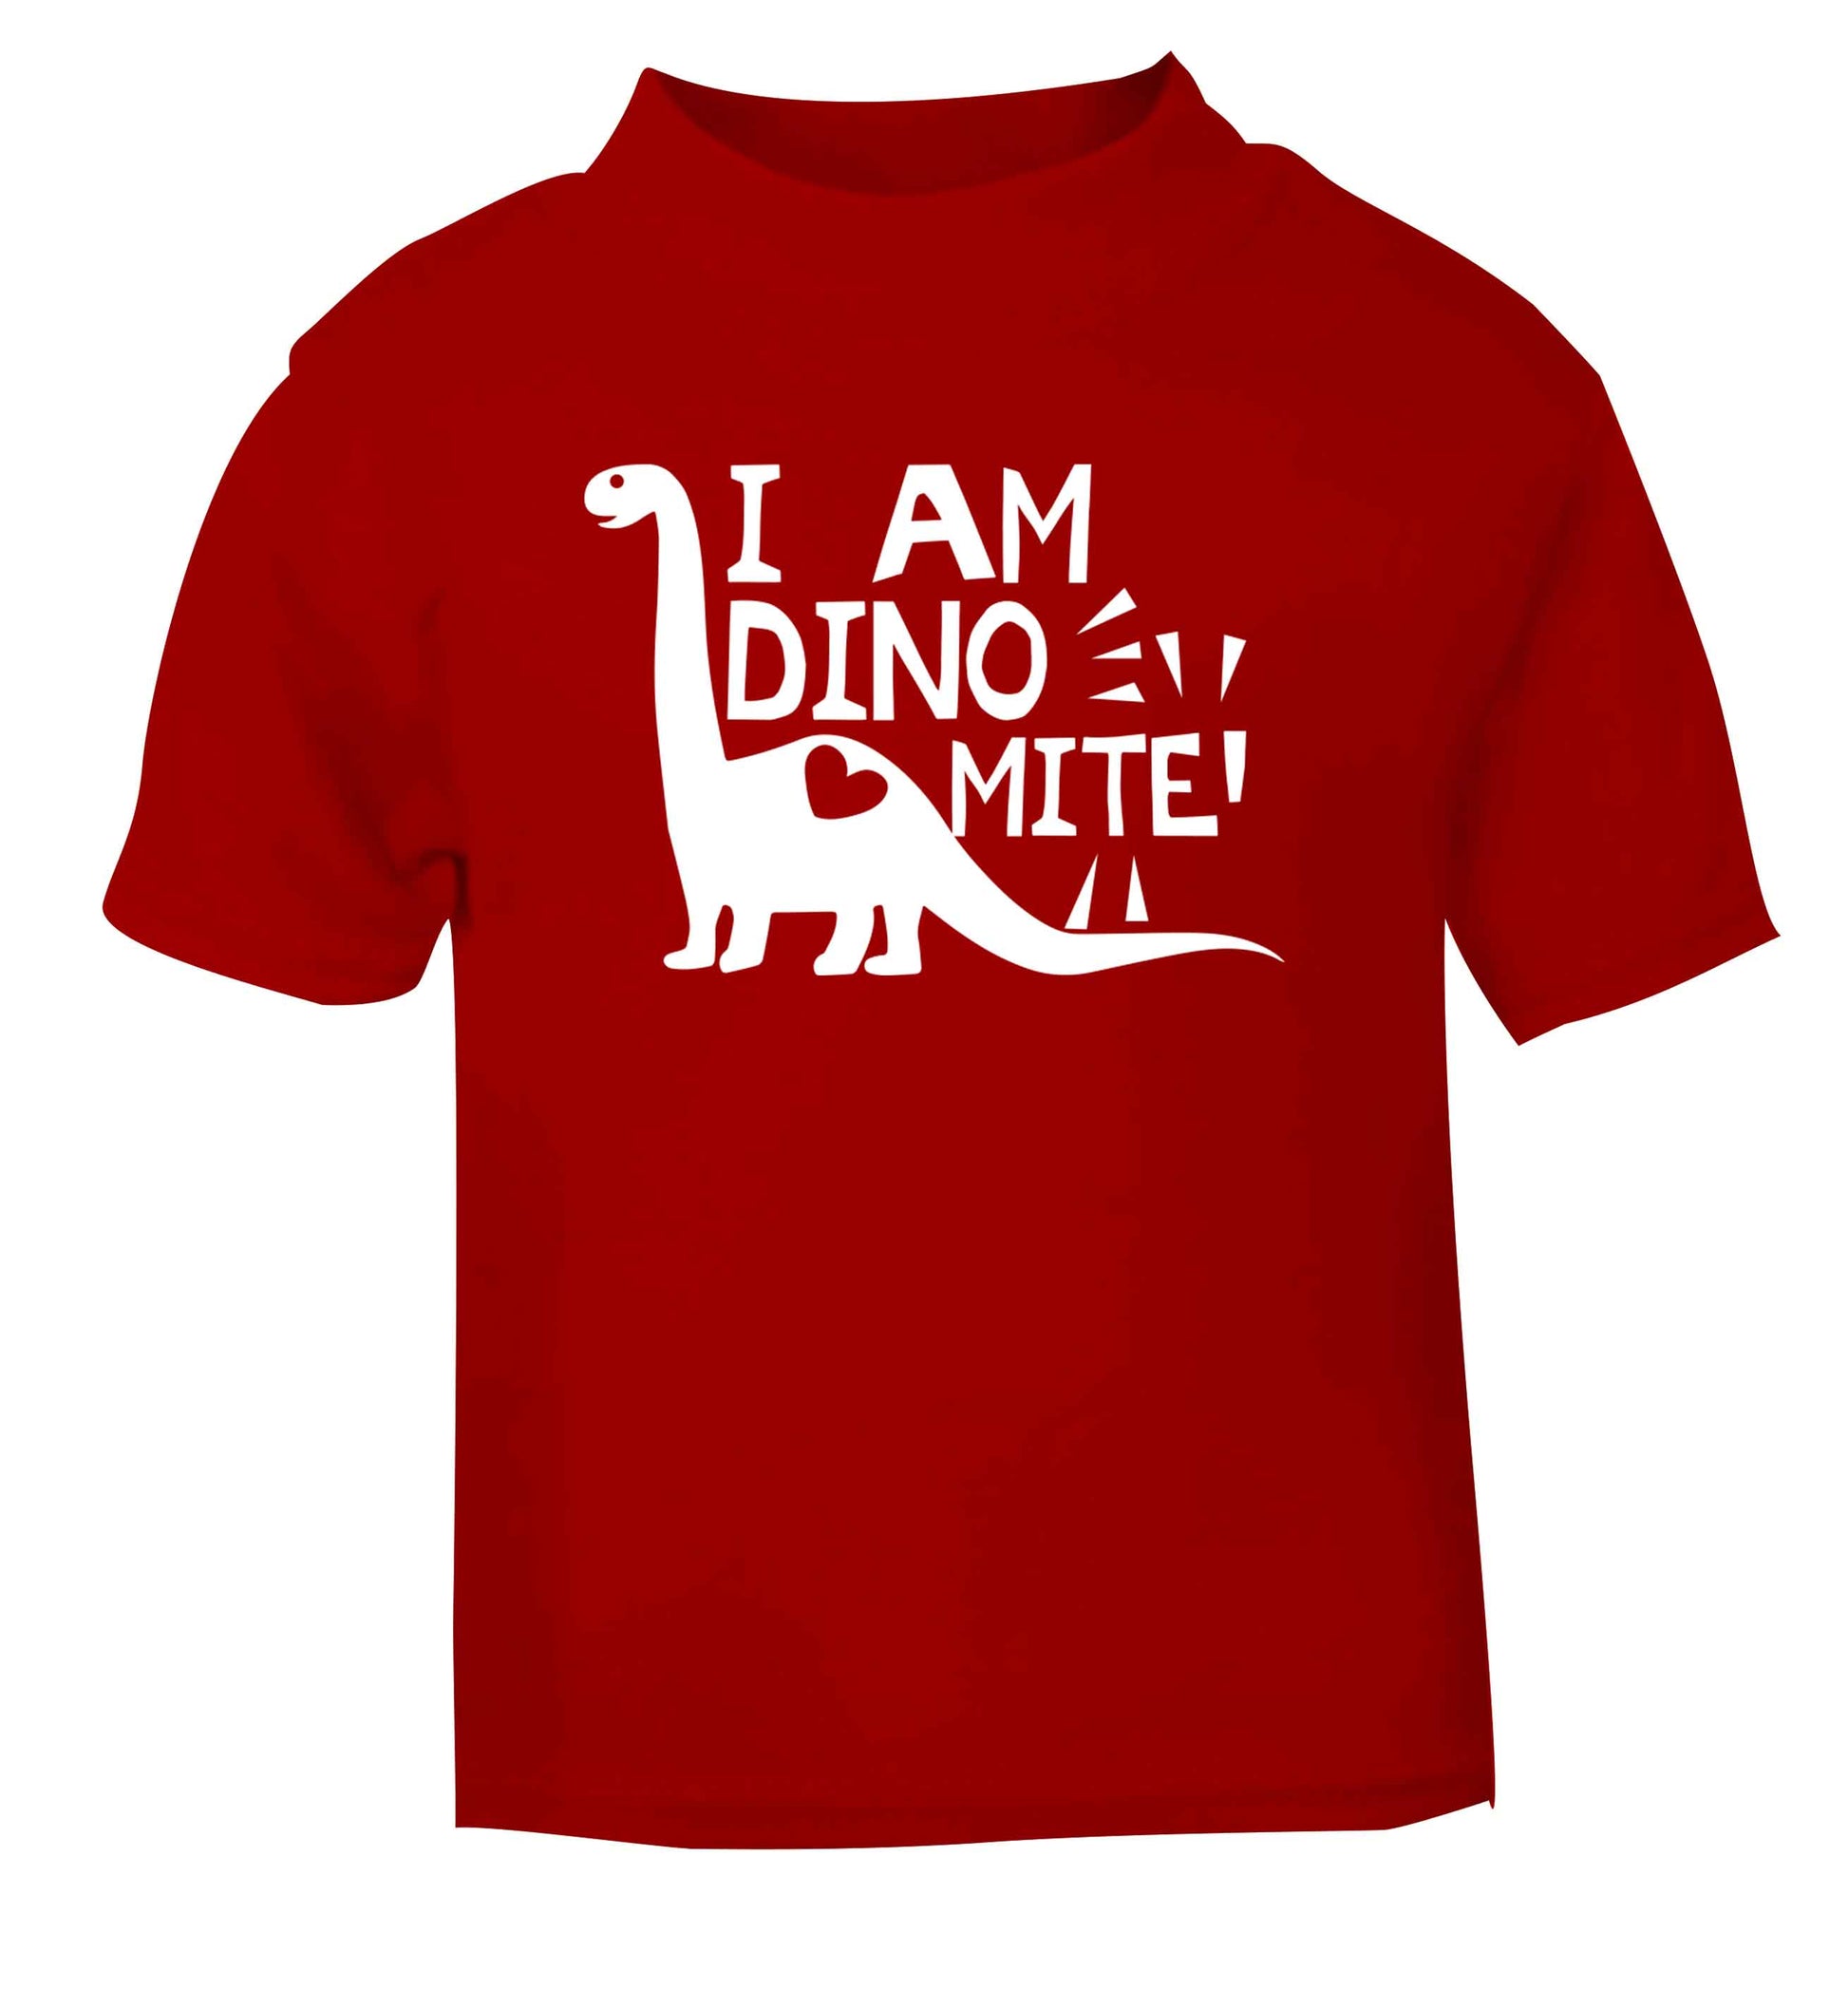 I am dinomite! red Baby Toddler Tshirt 2 Years